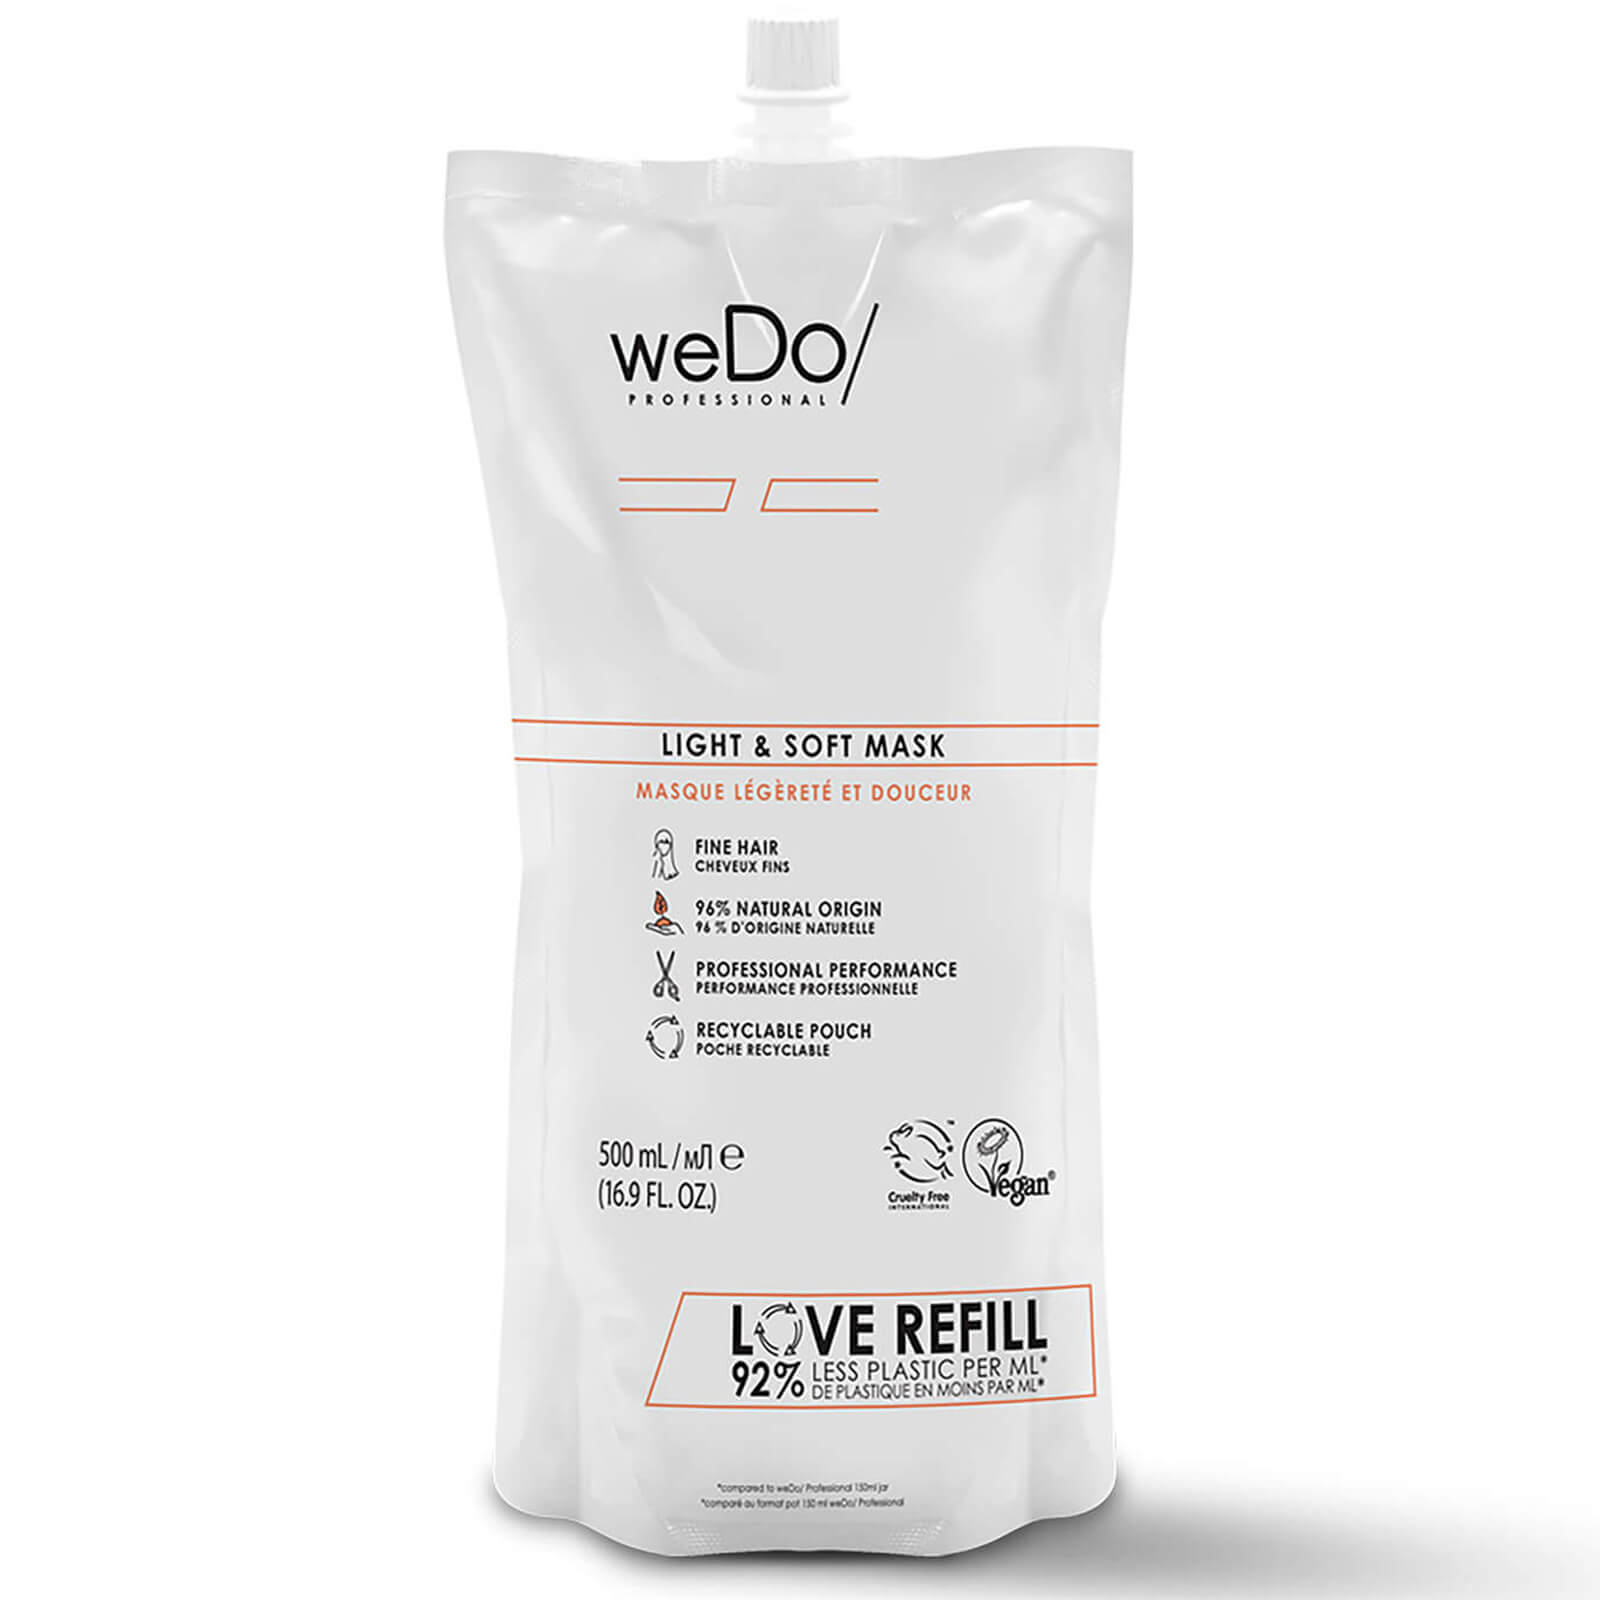 Wedo/ Professional Wedo Professional Haarpflege Masken & Pflege Light & Soft Mask Refill